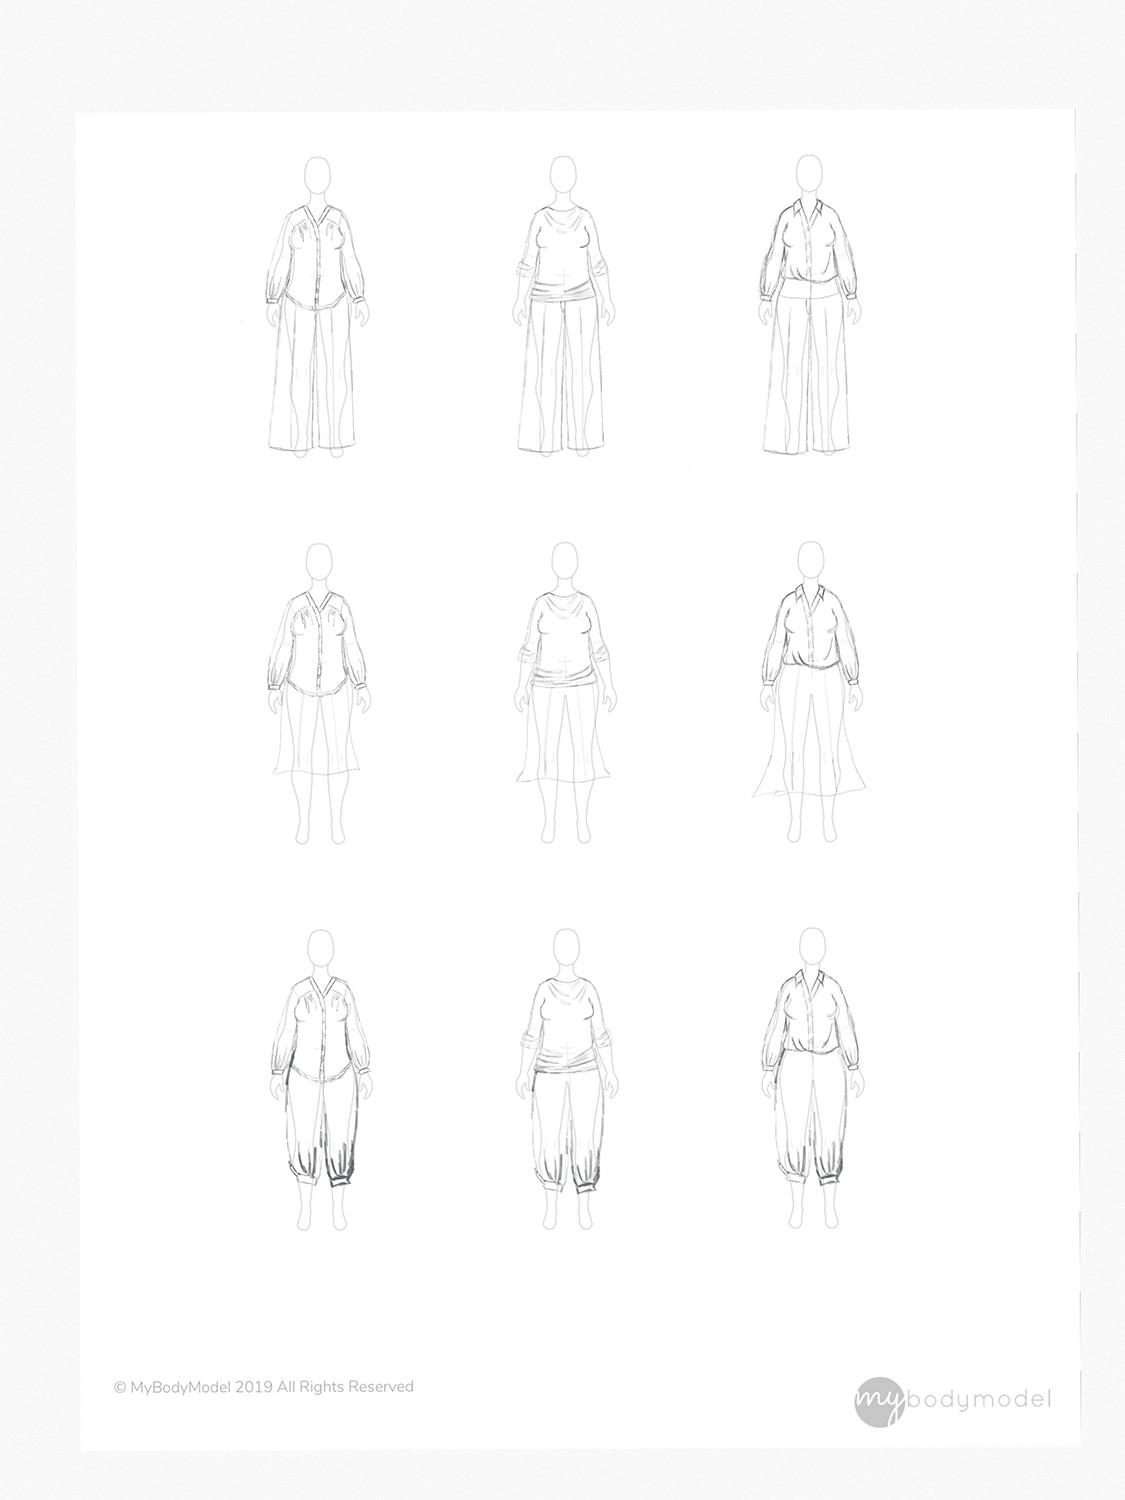 MyBodyModel-Kibbe Soft Natural Fashion Sketch -CombinationsSketch by Doctor T